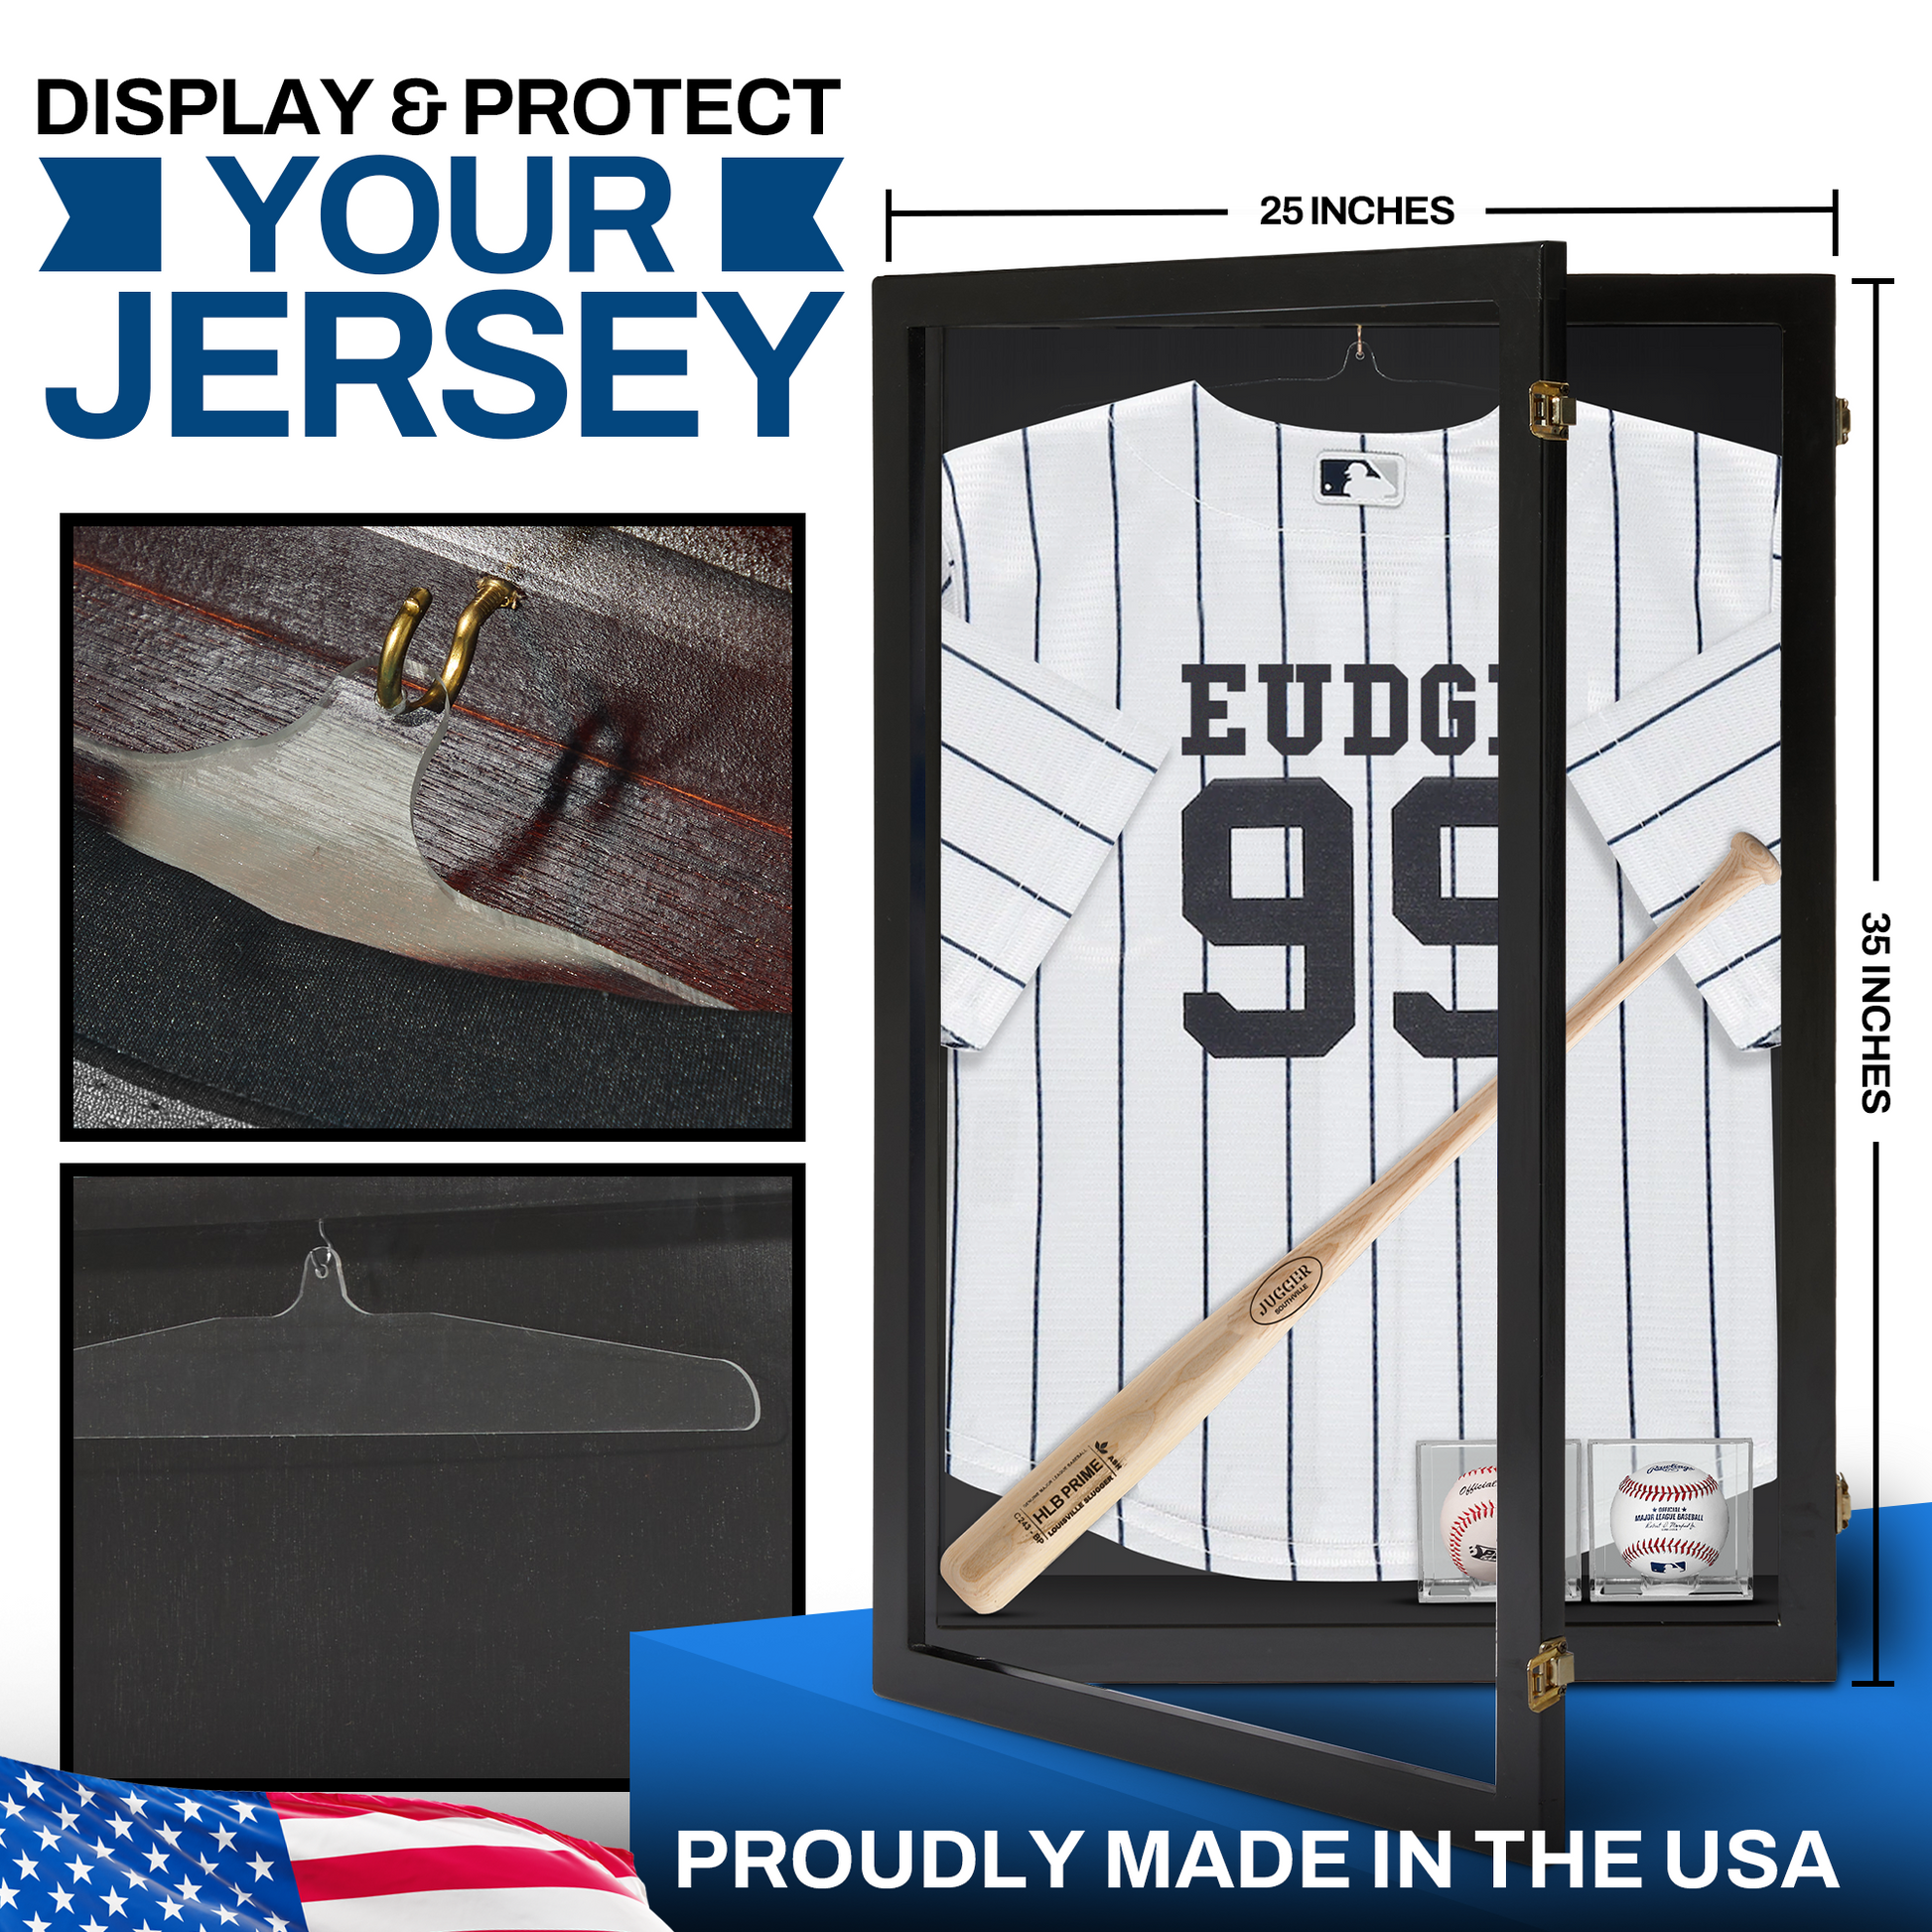 Jersey Display Case, Baseball Jersey Display